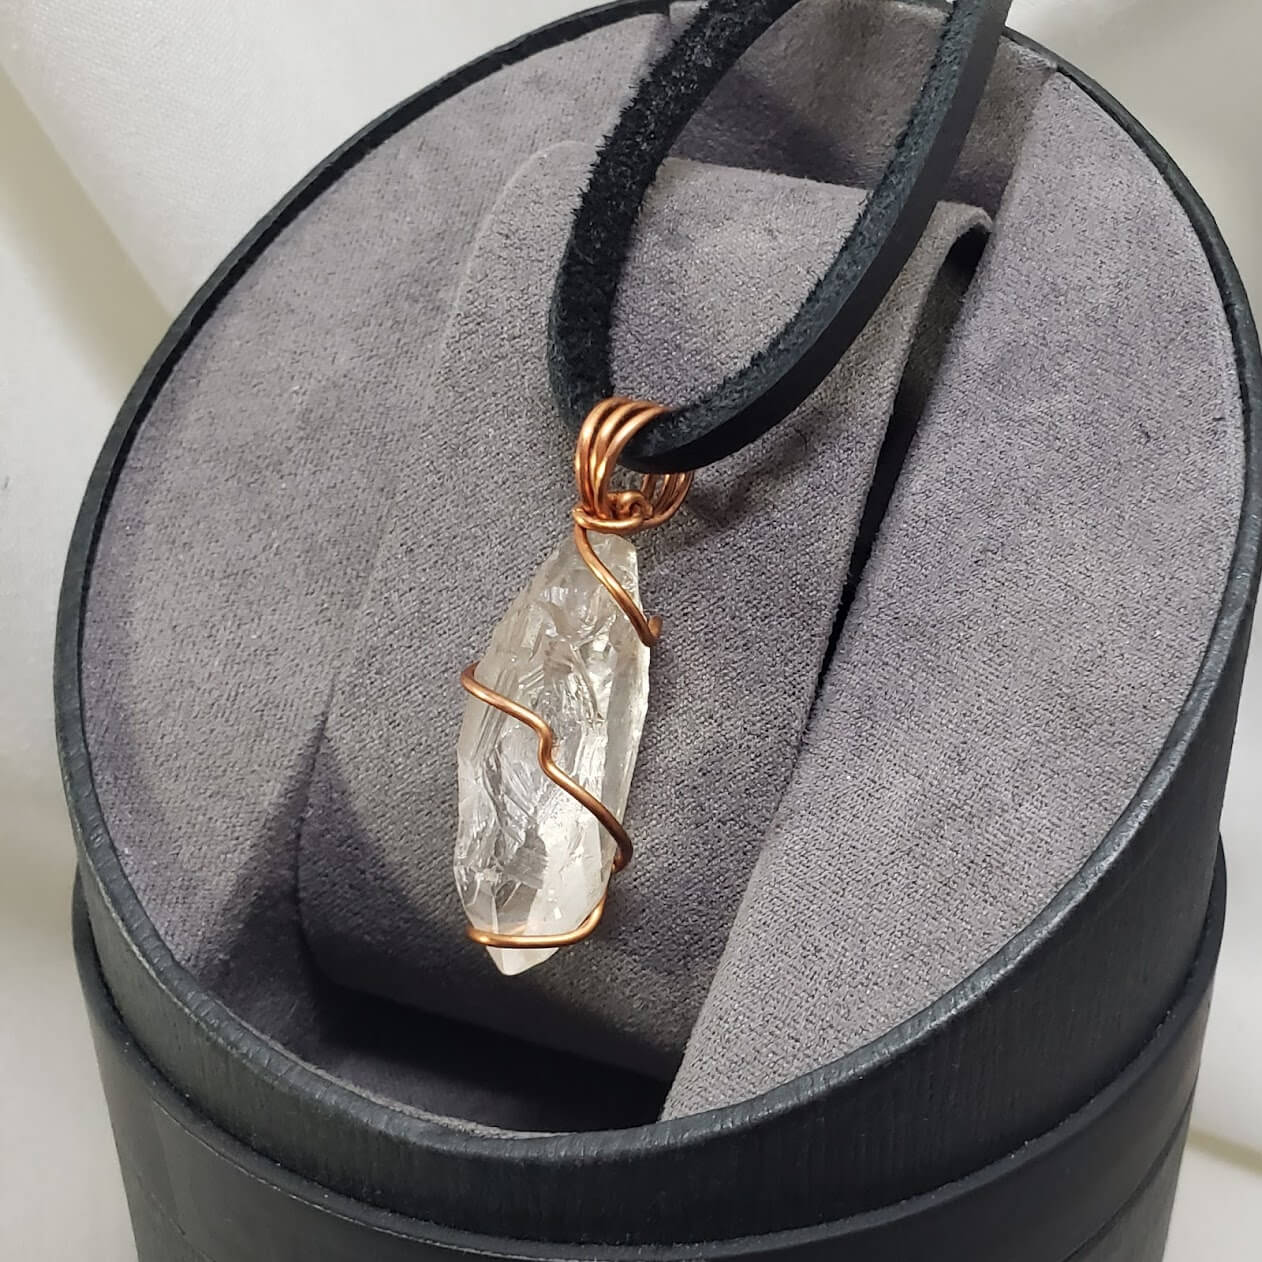 Lemurian Light Crystal Pendant - Mother Of Metal - For Her - For Him - For Necks-Charms & Pendants